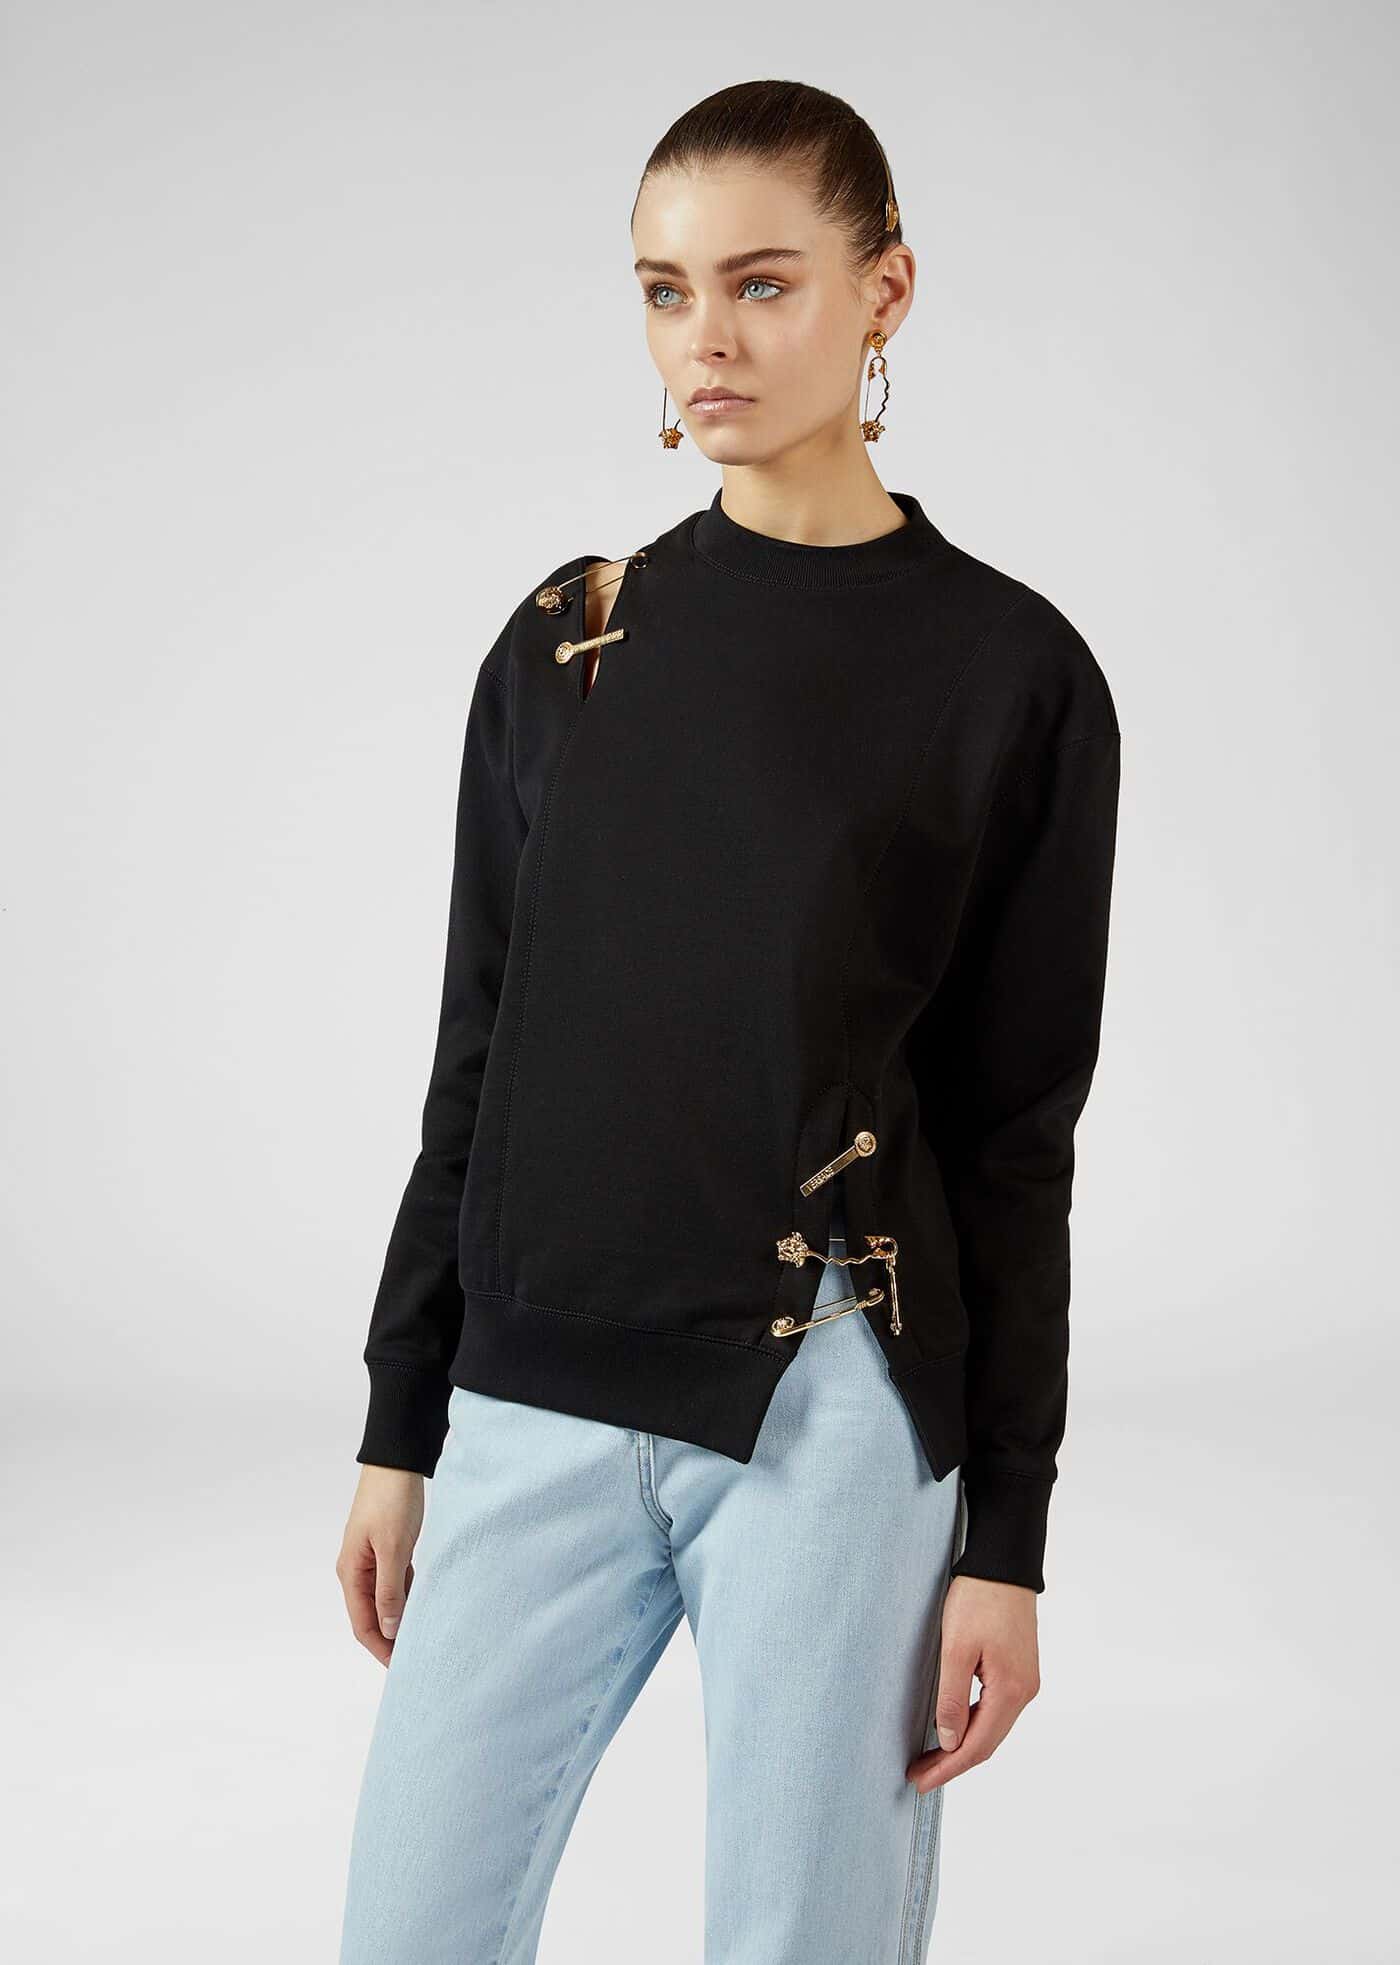 Editor's Pick: Versace Safety Pin Sweatshirt